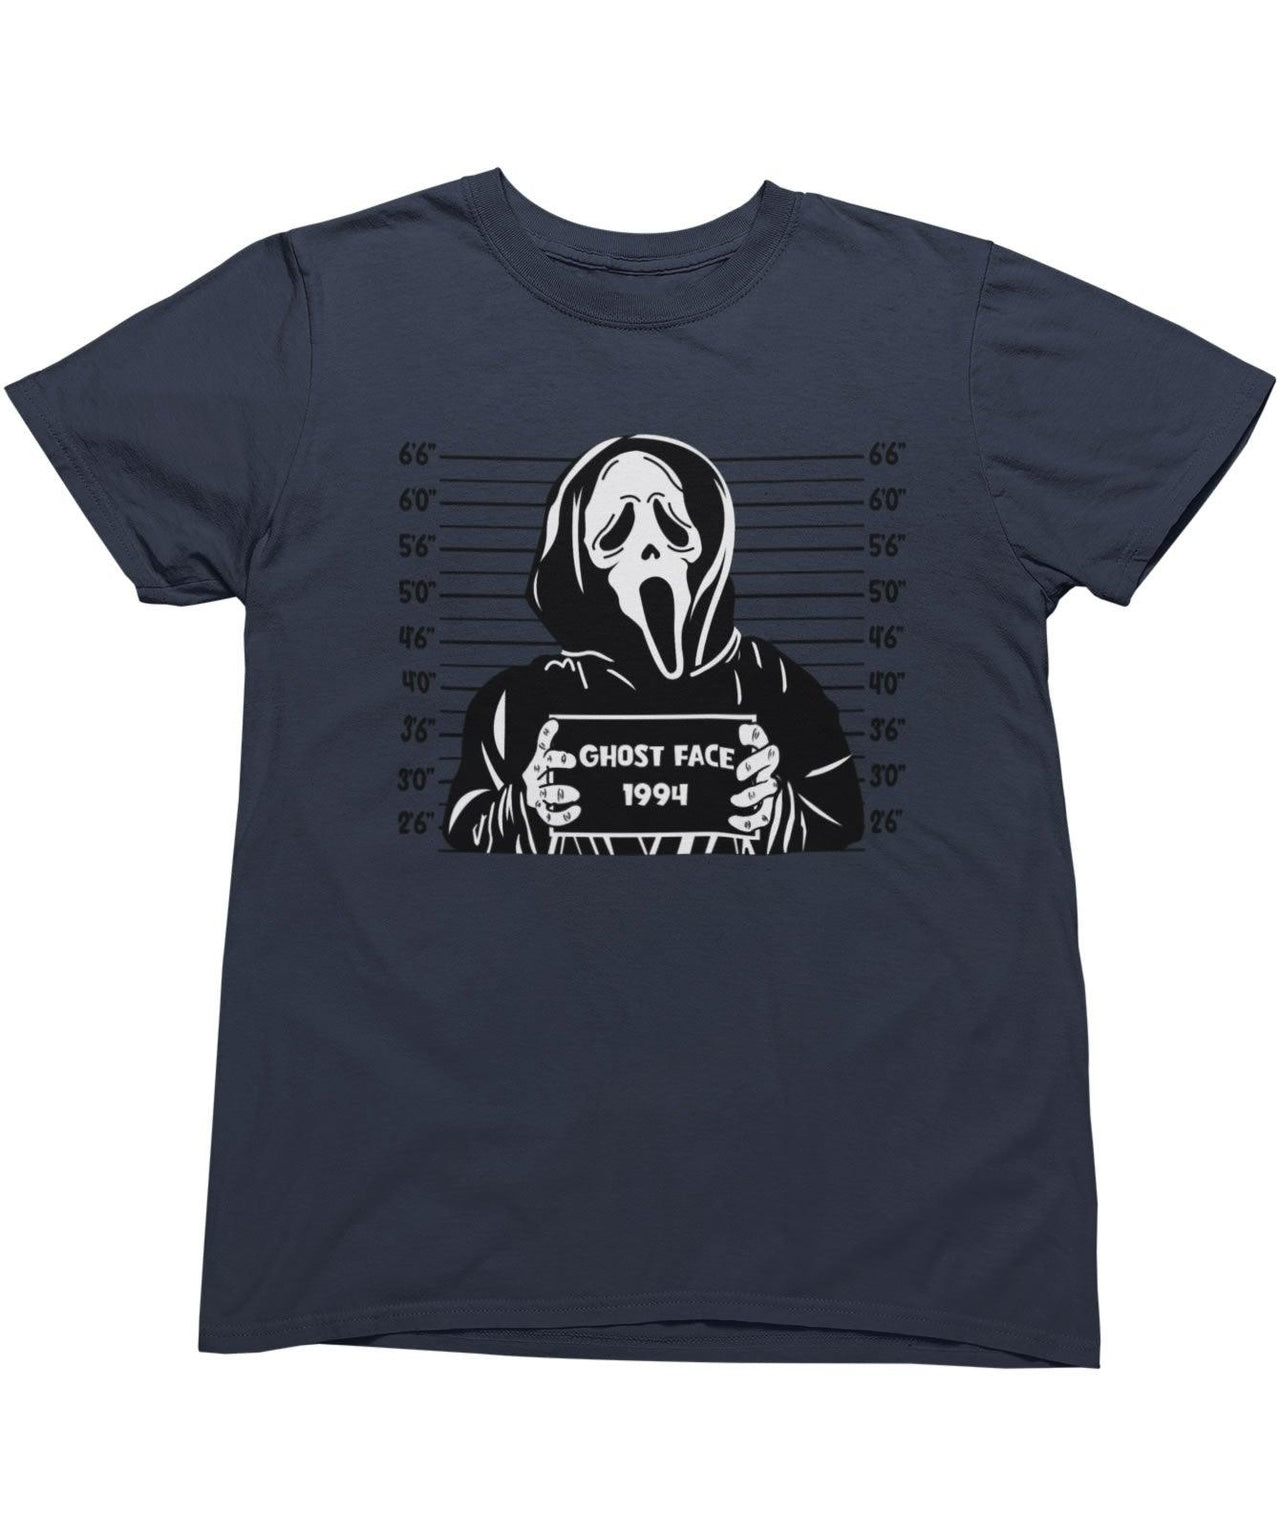 Ghostface Mugshot Horror Film Tribute Graphic T-Shirt For Men 8Ball